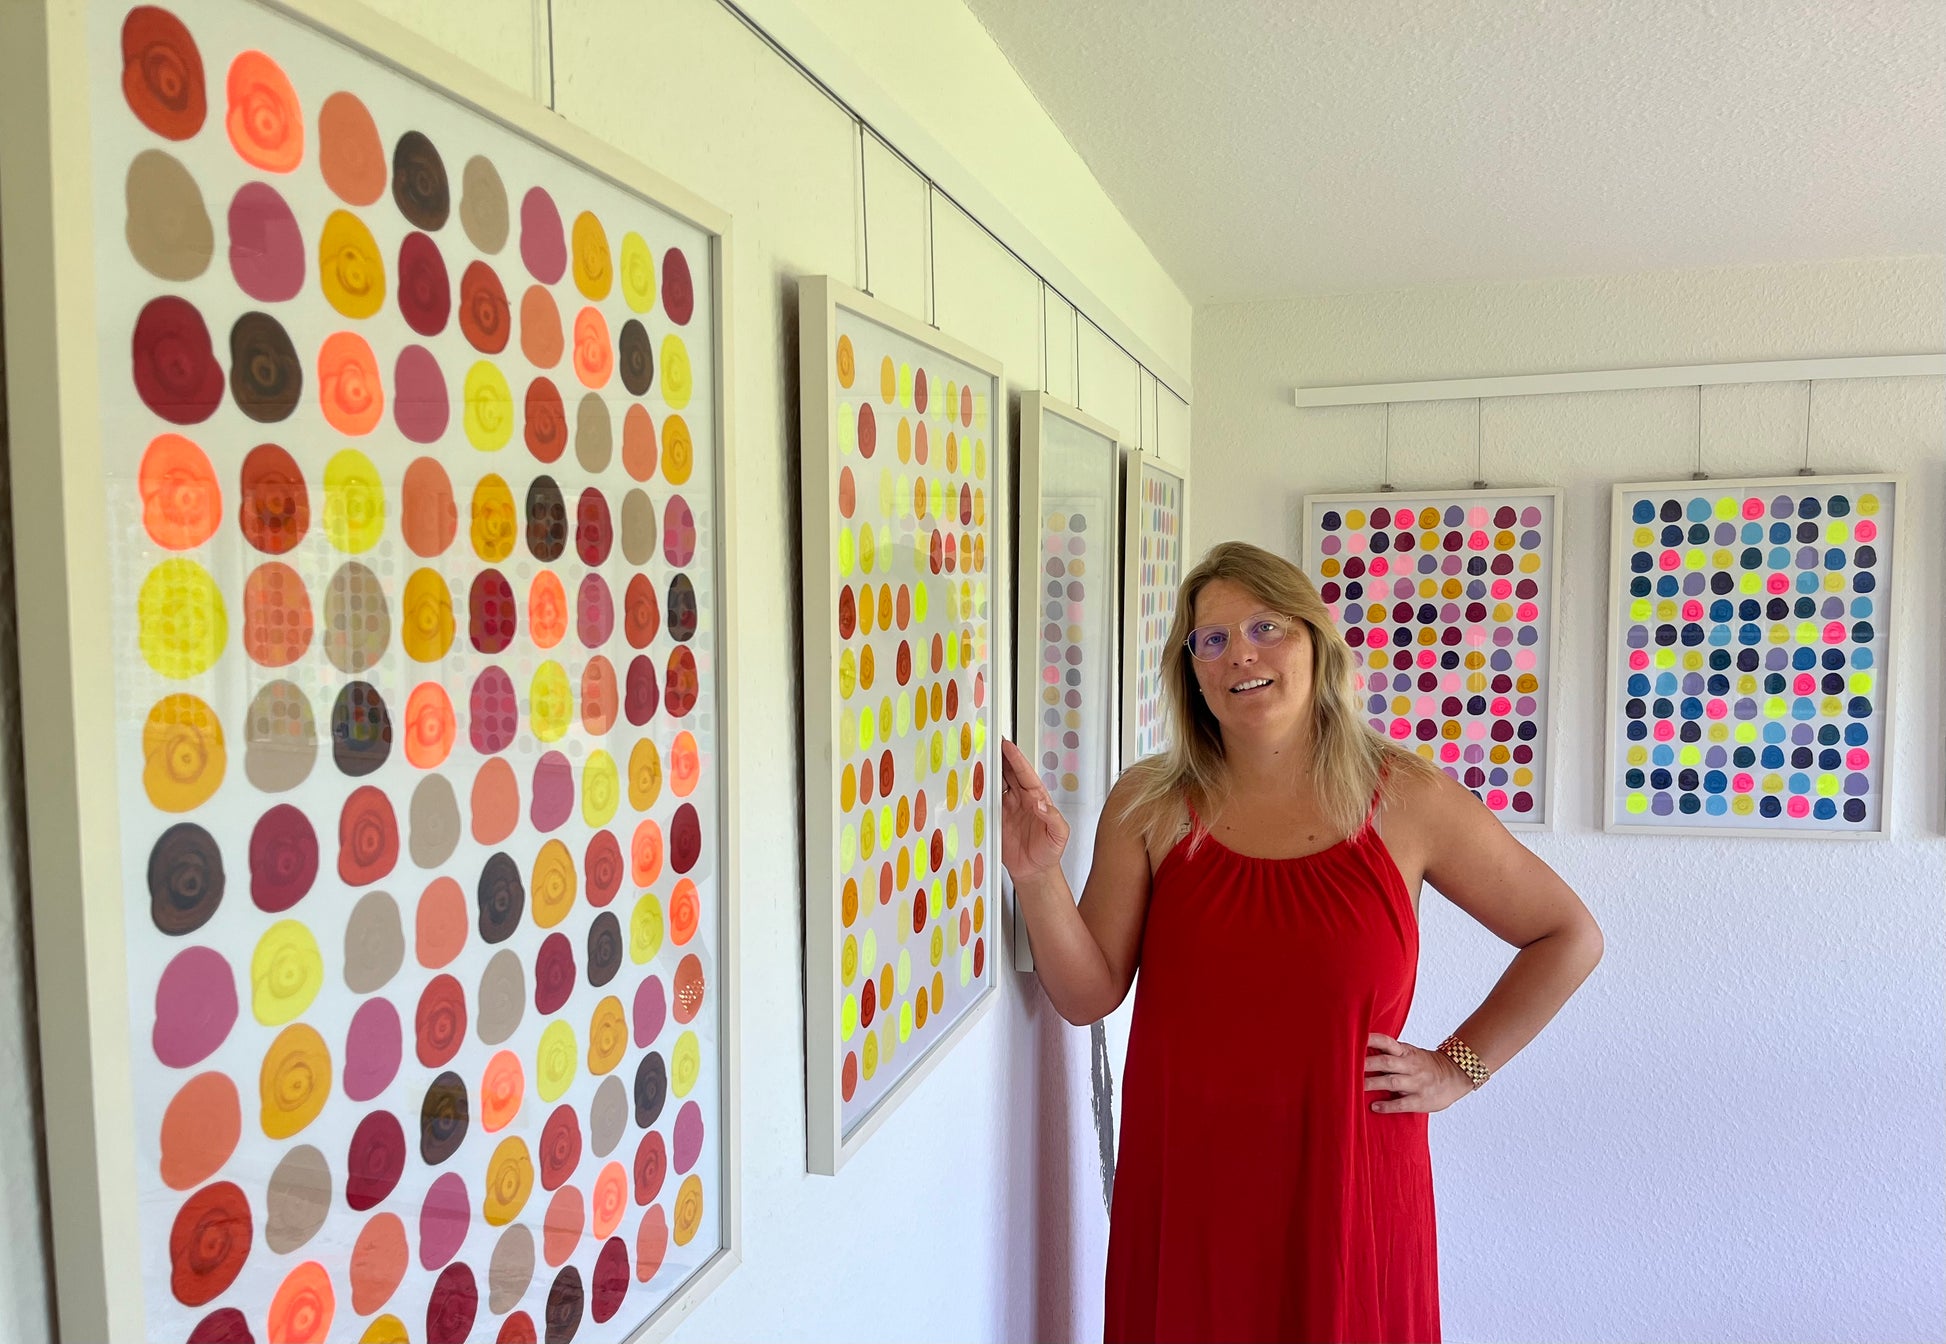 "Habits" Painting Workshop with Janine in Bietigheim-Bissingen, Germany